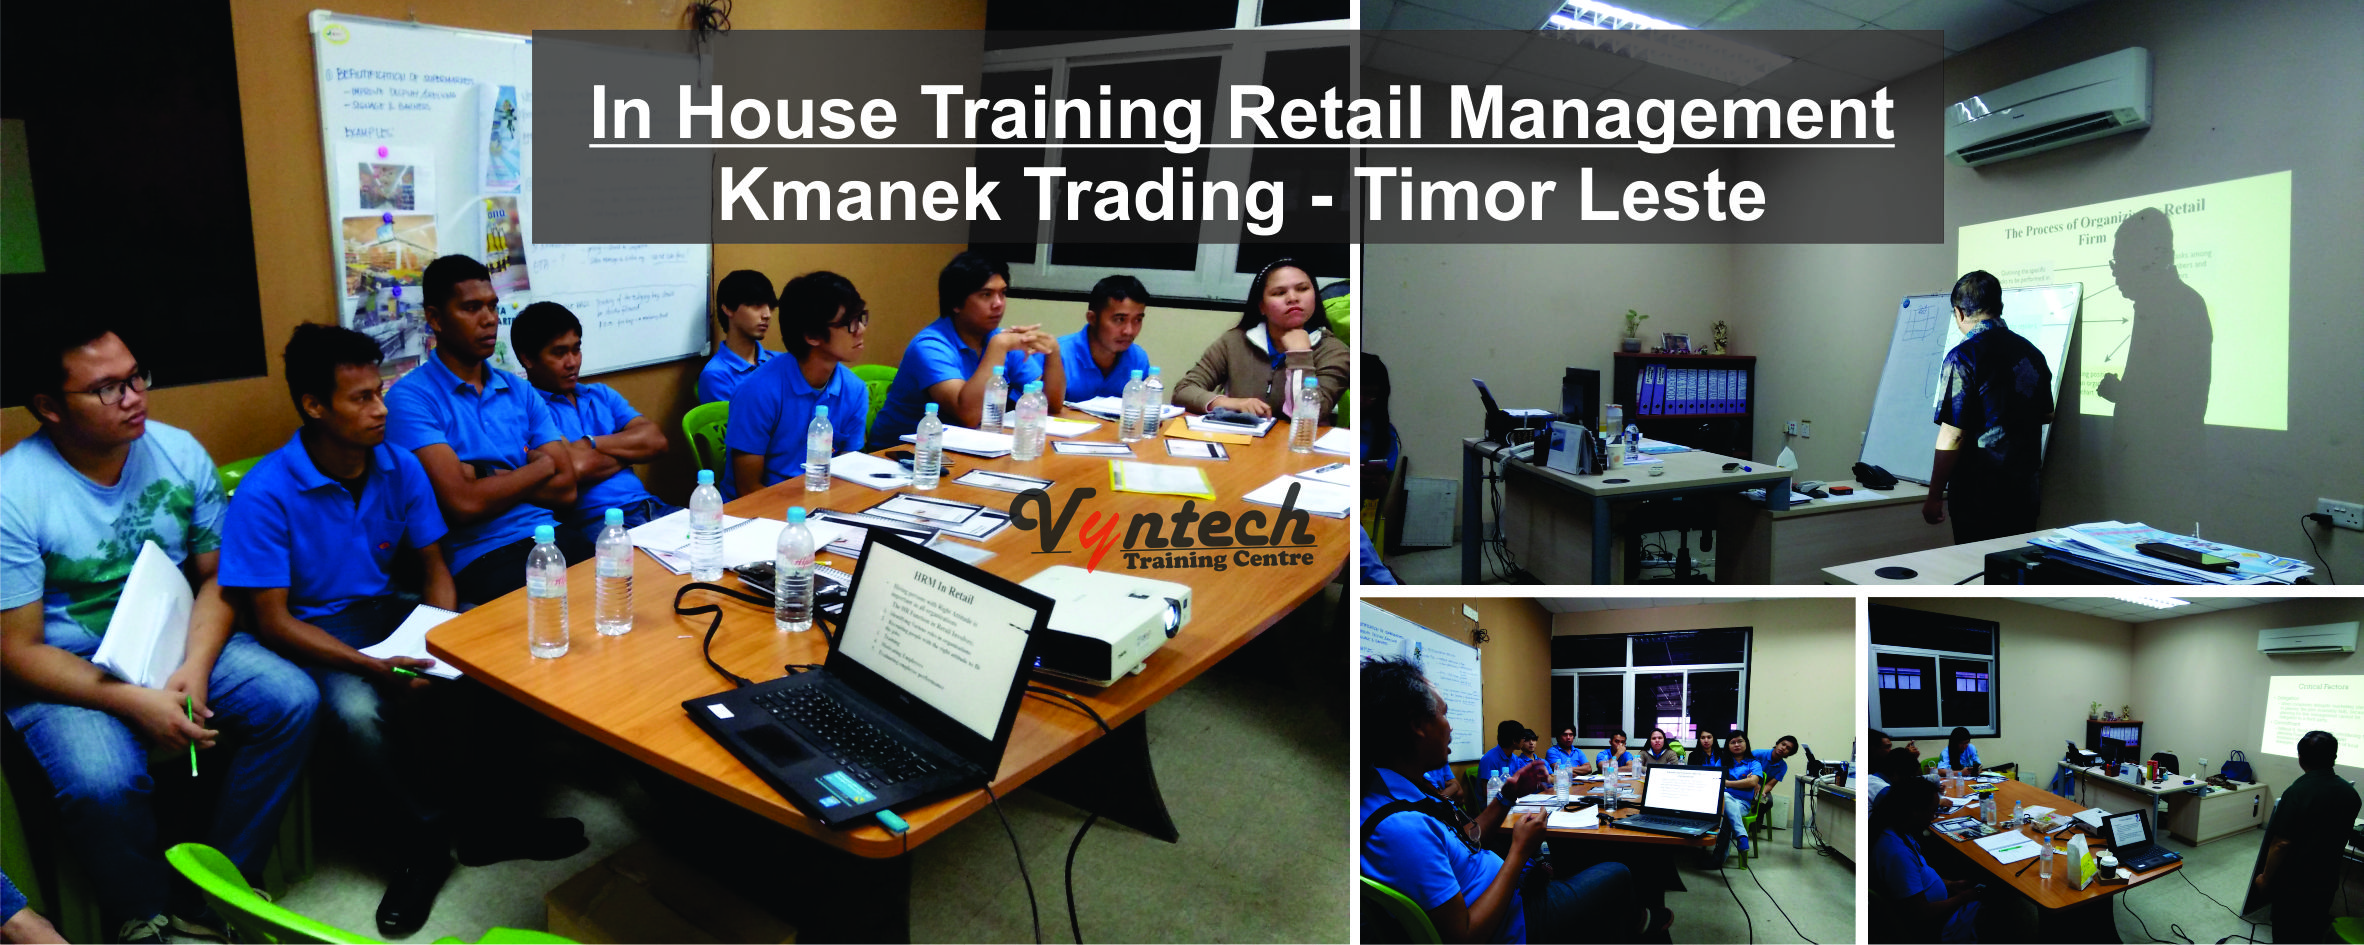 20171115 Training IHT Retail Management - Kmanek Trading - Timot Leste TLS